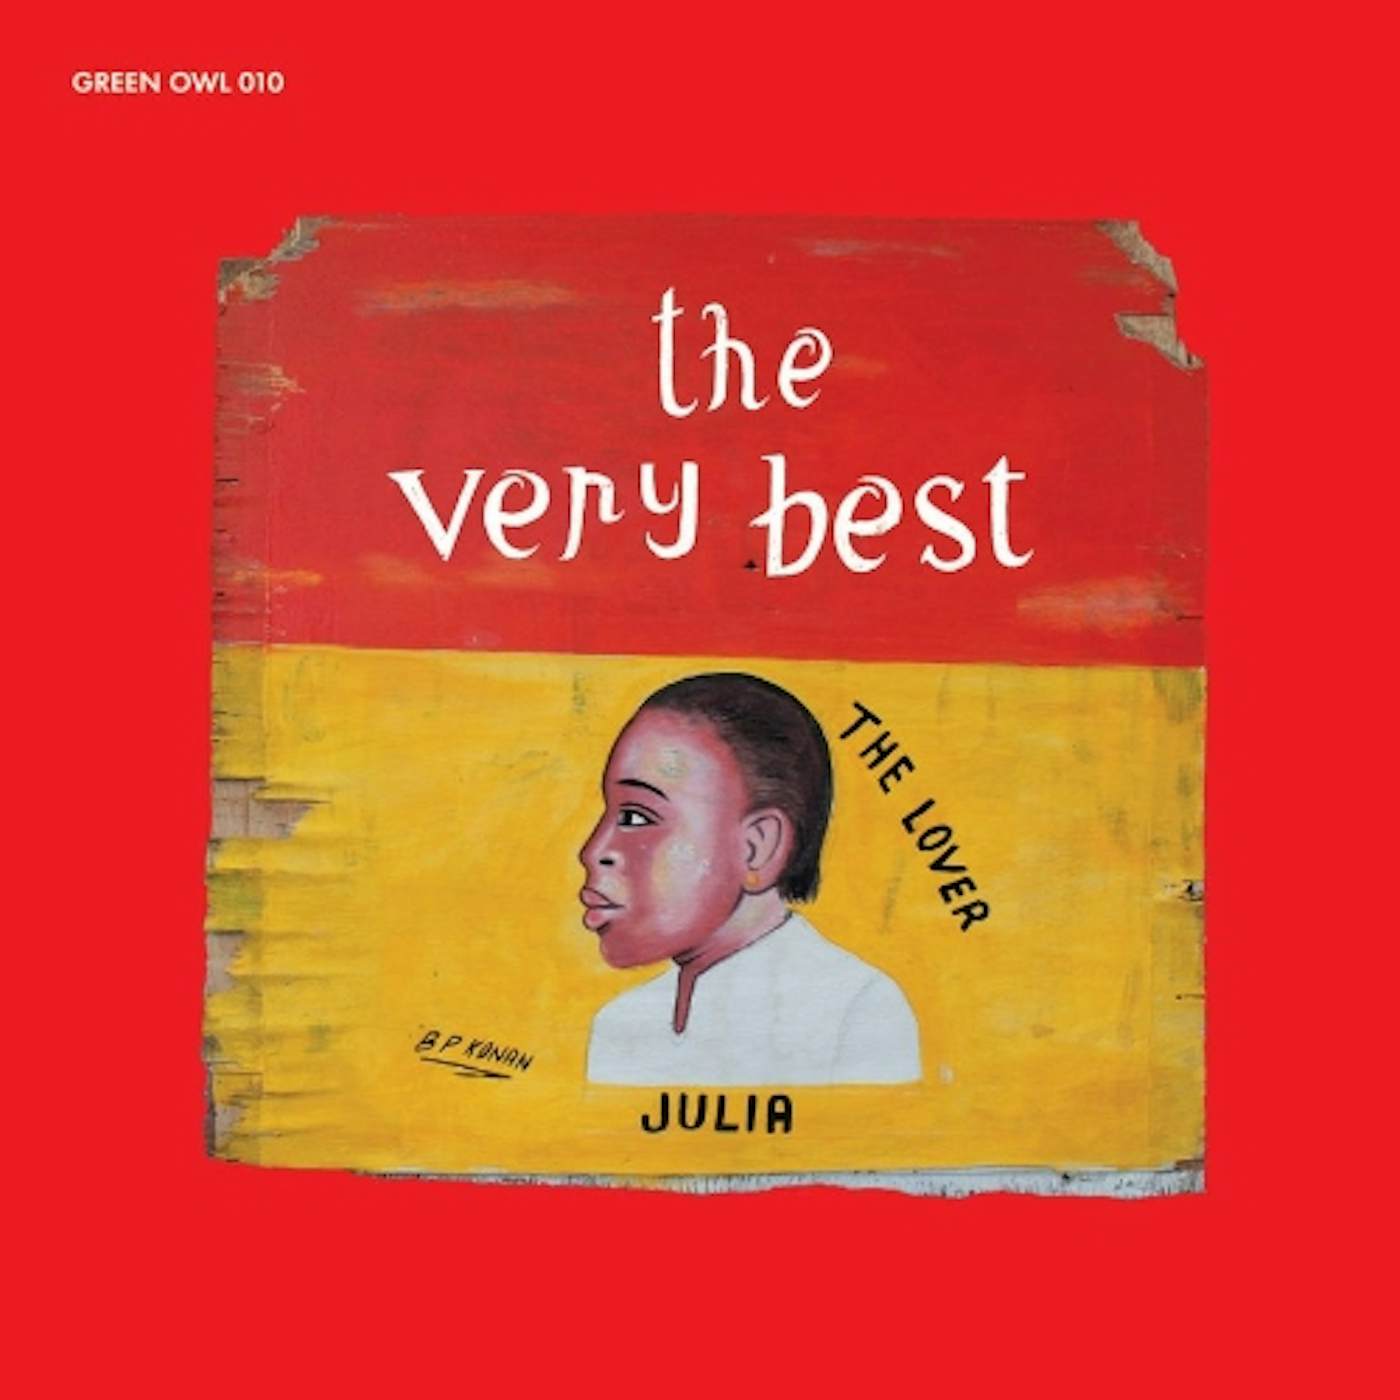 The Very Best Julia Vinyl Record